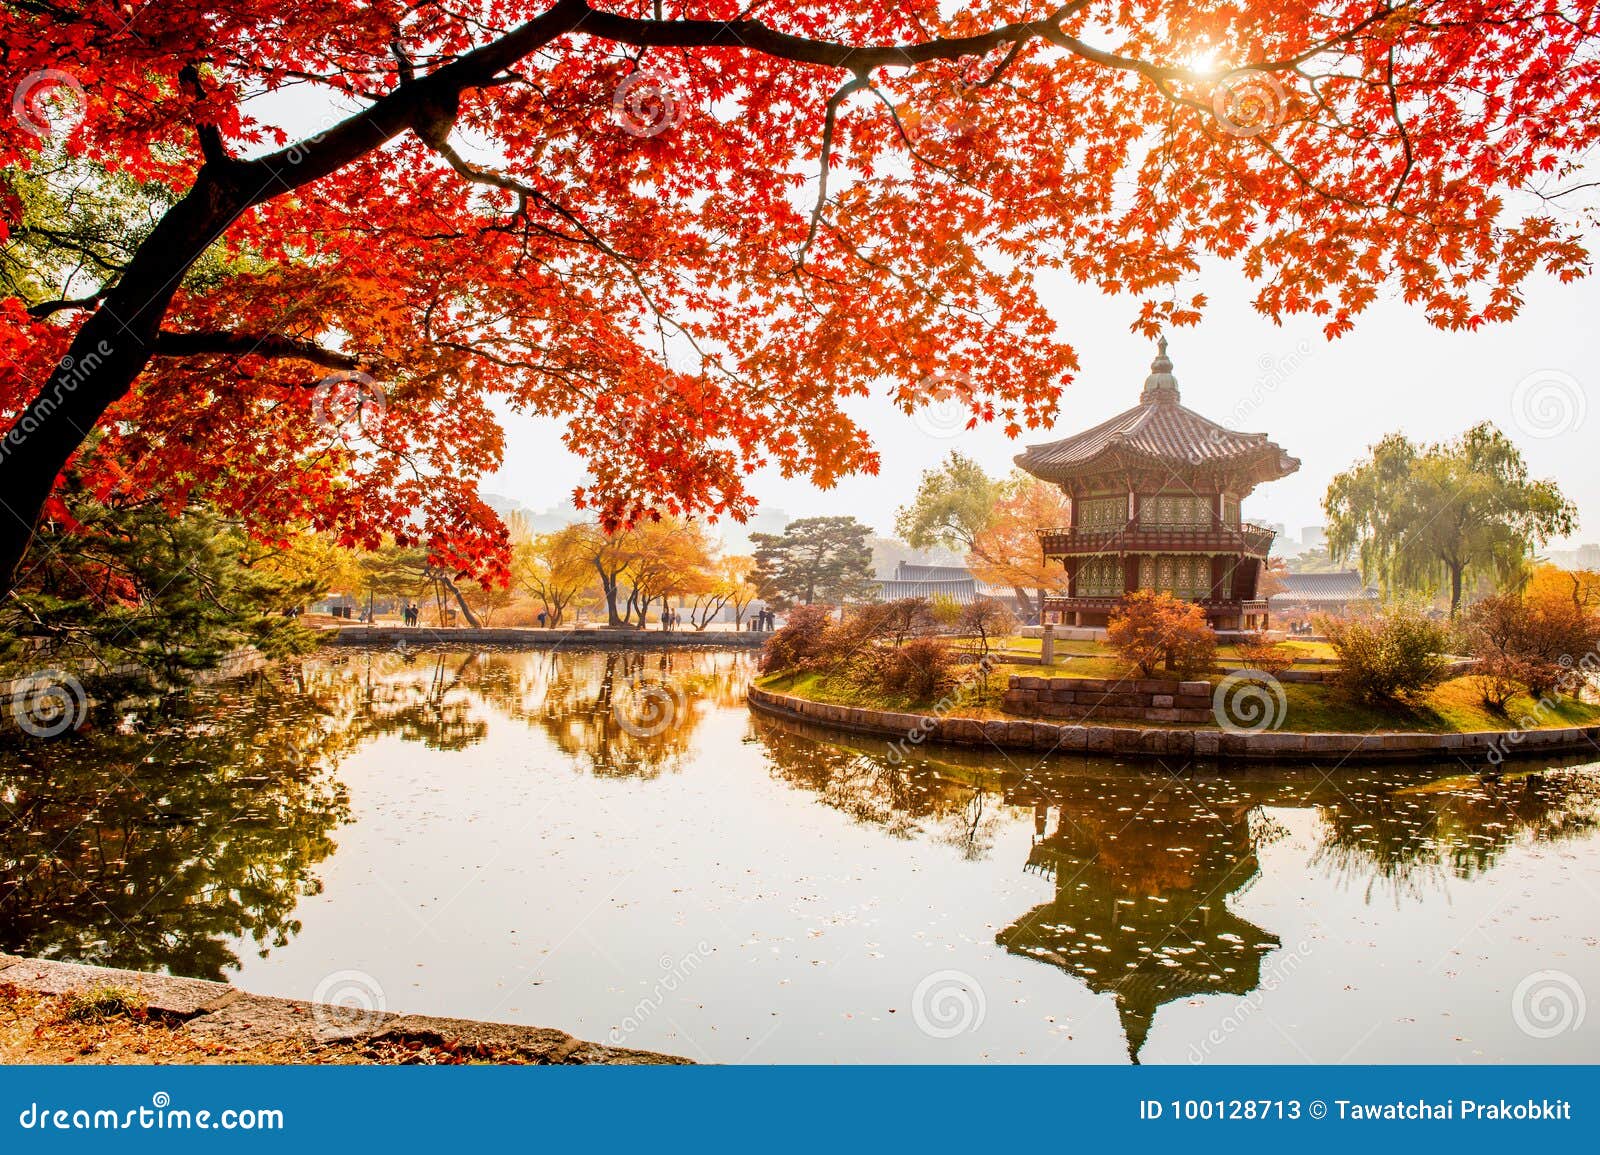 autumn in gyeongbokgung palace, seoul in south korea